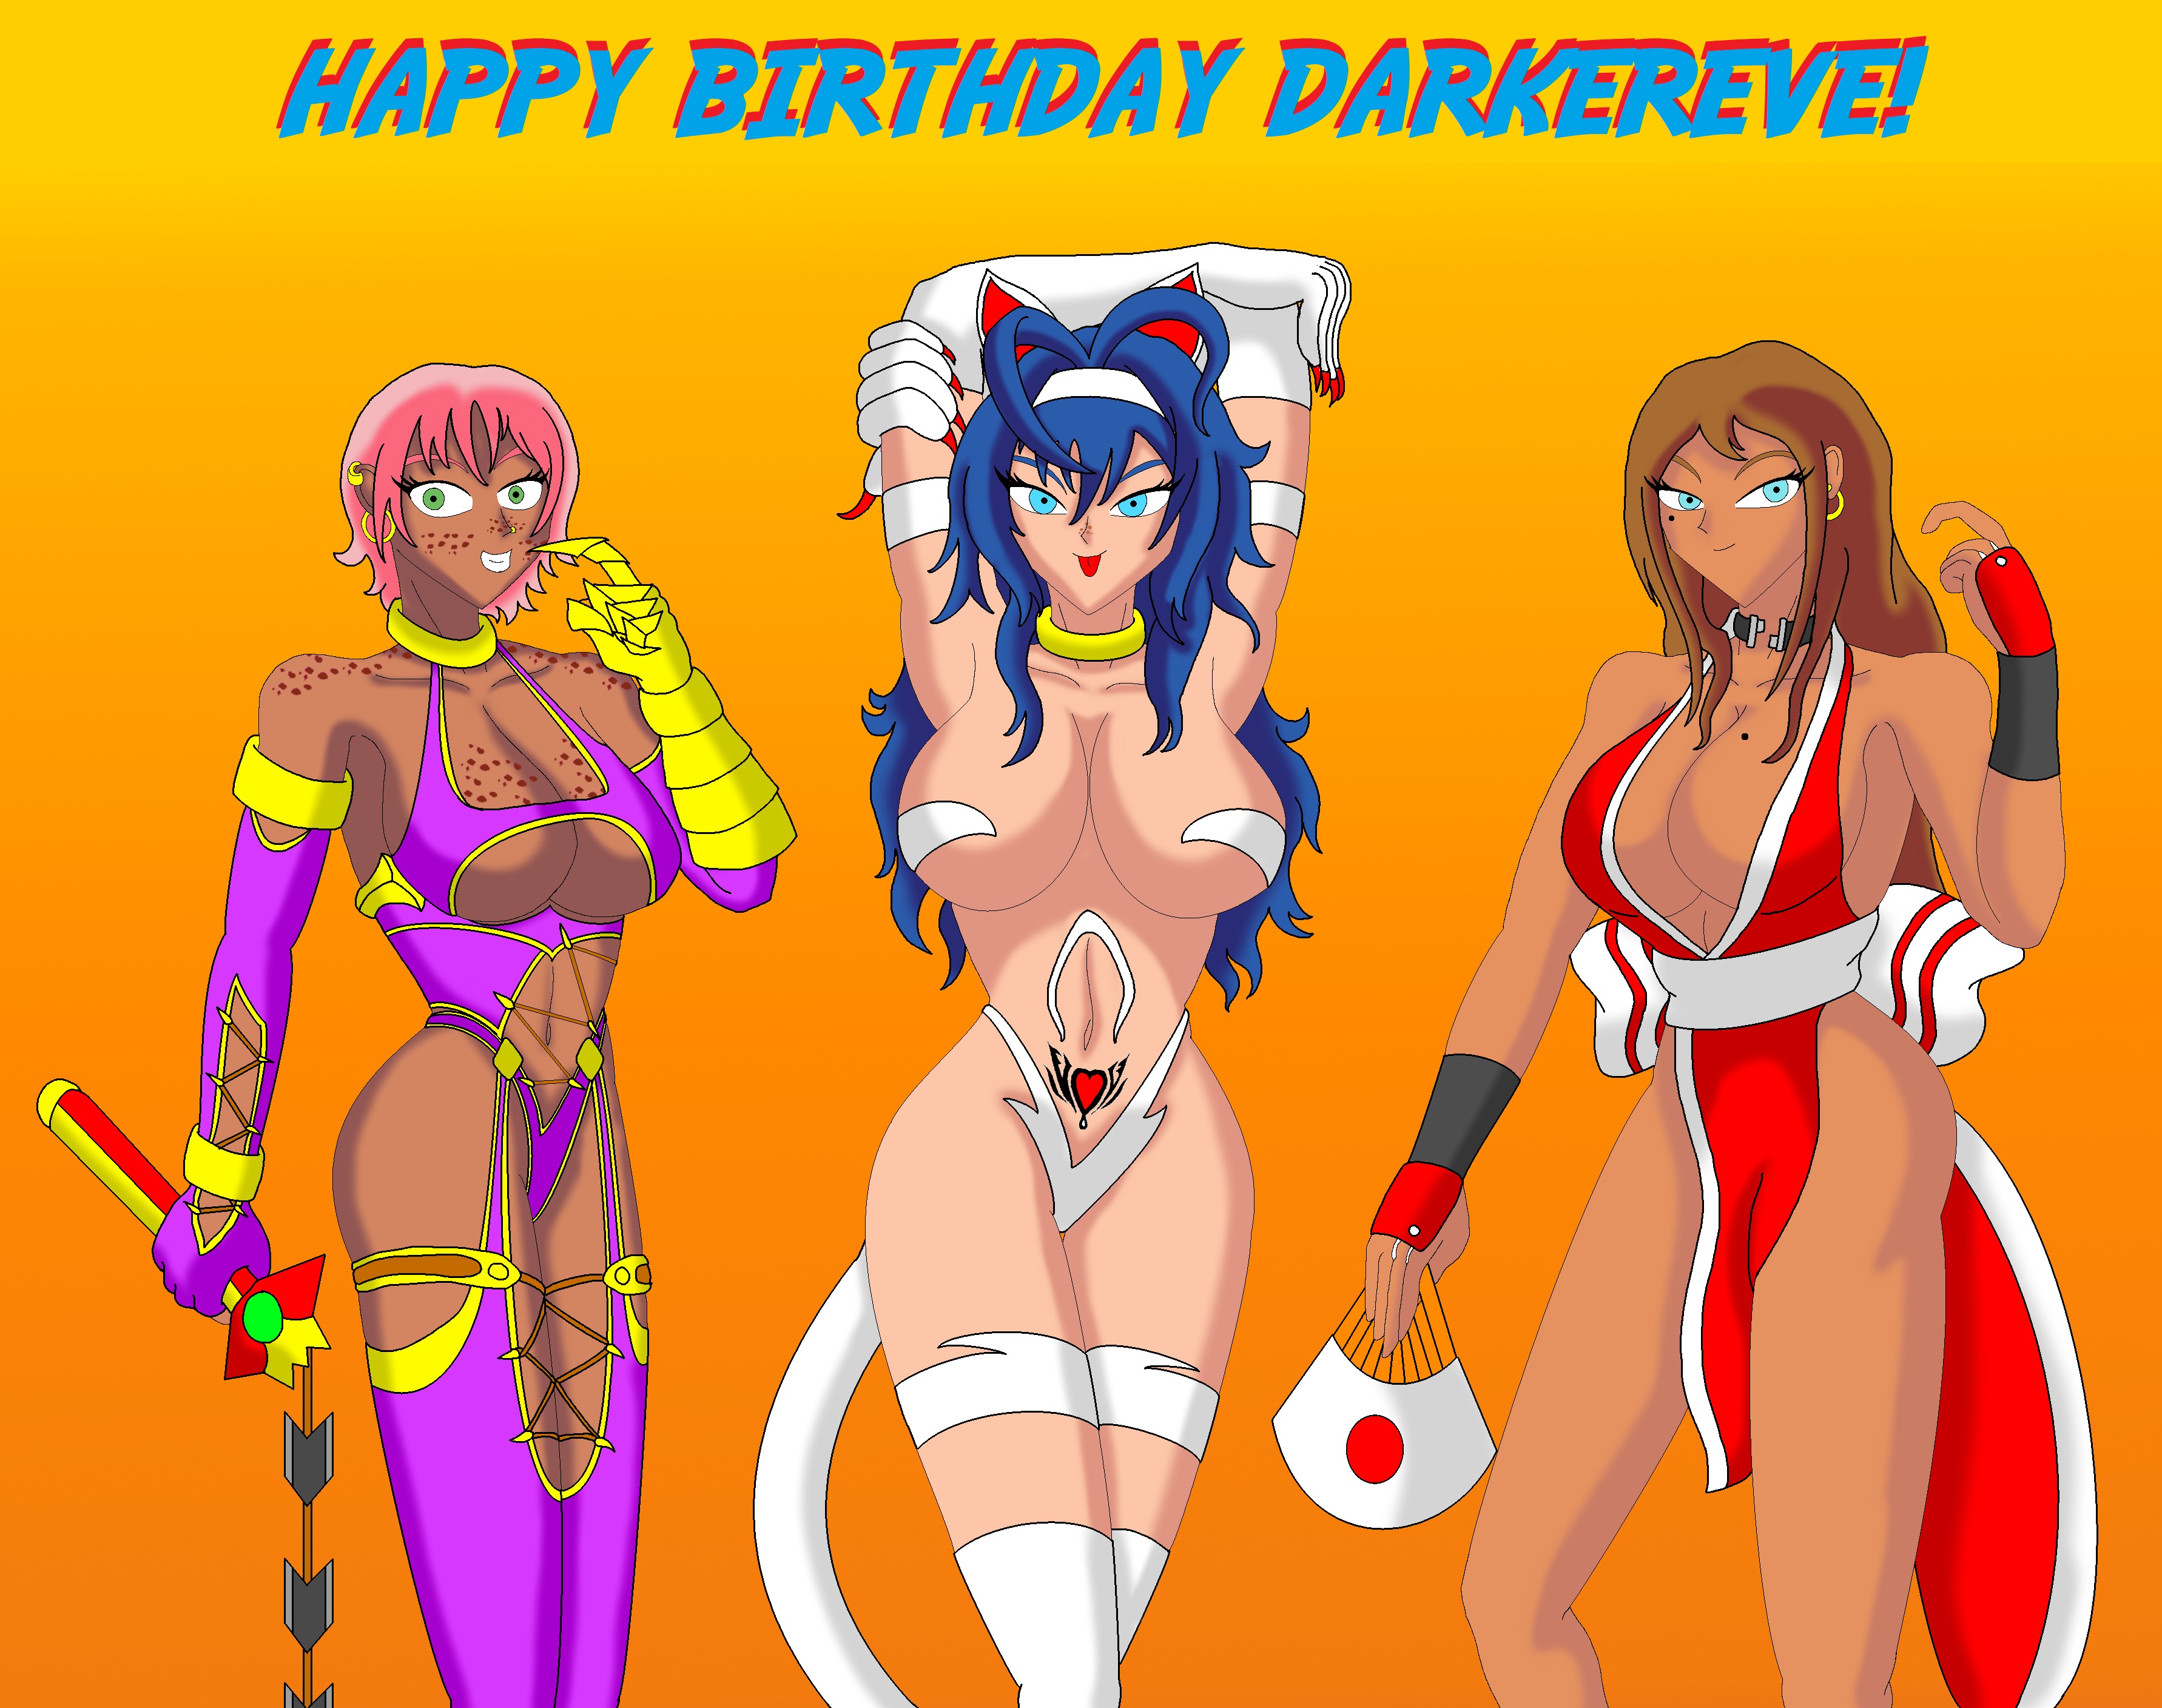 Happy Birthday, DarkerEve!